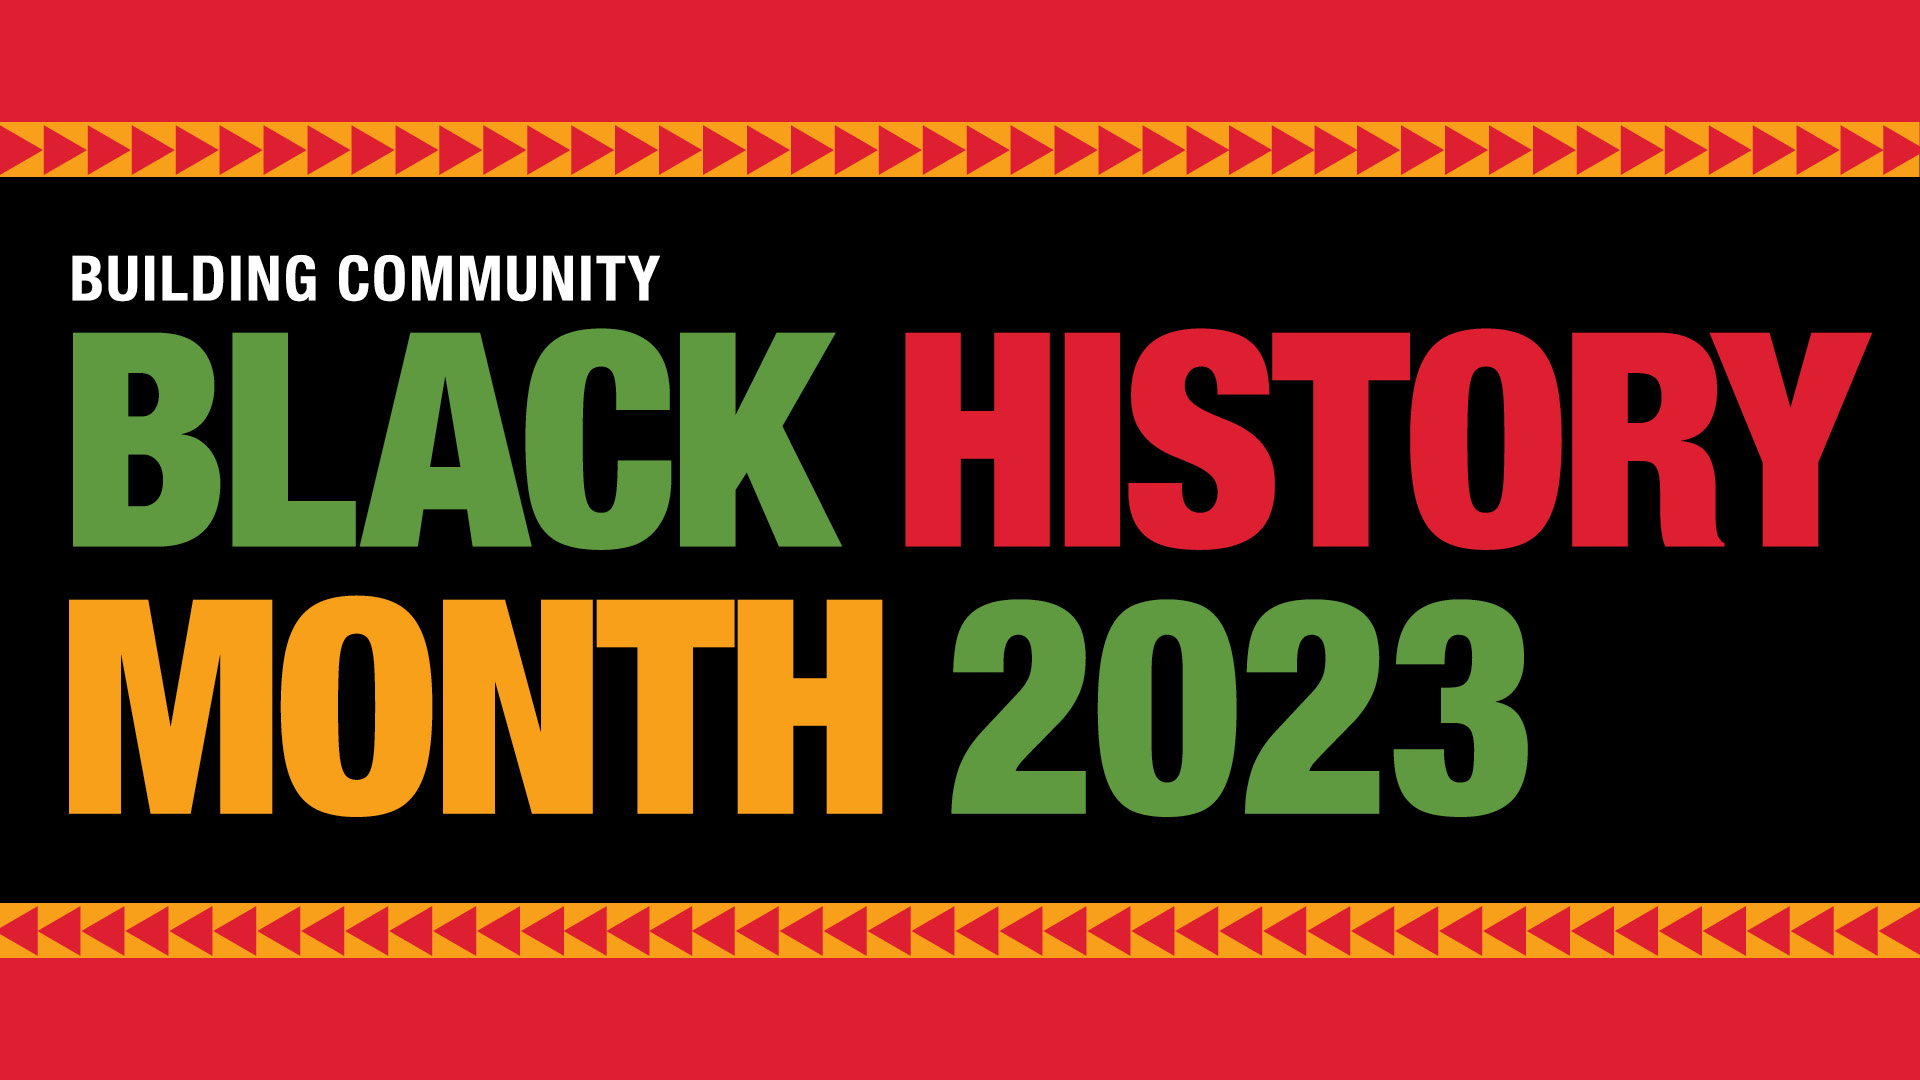 Black History Month: Building Community